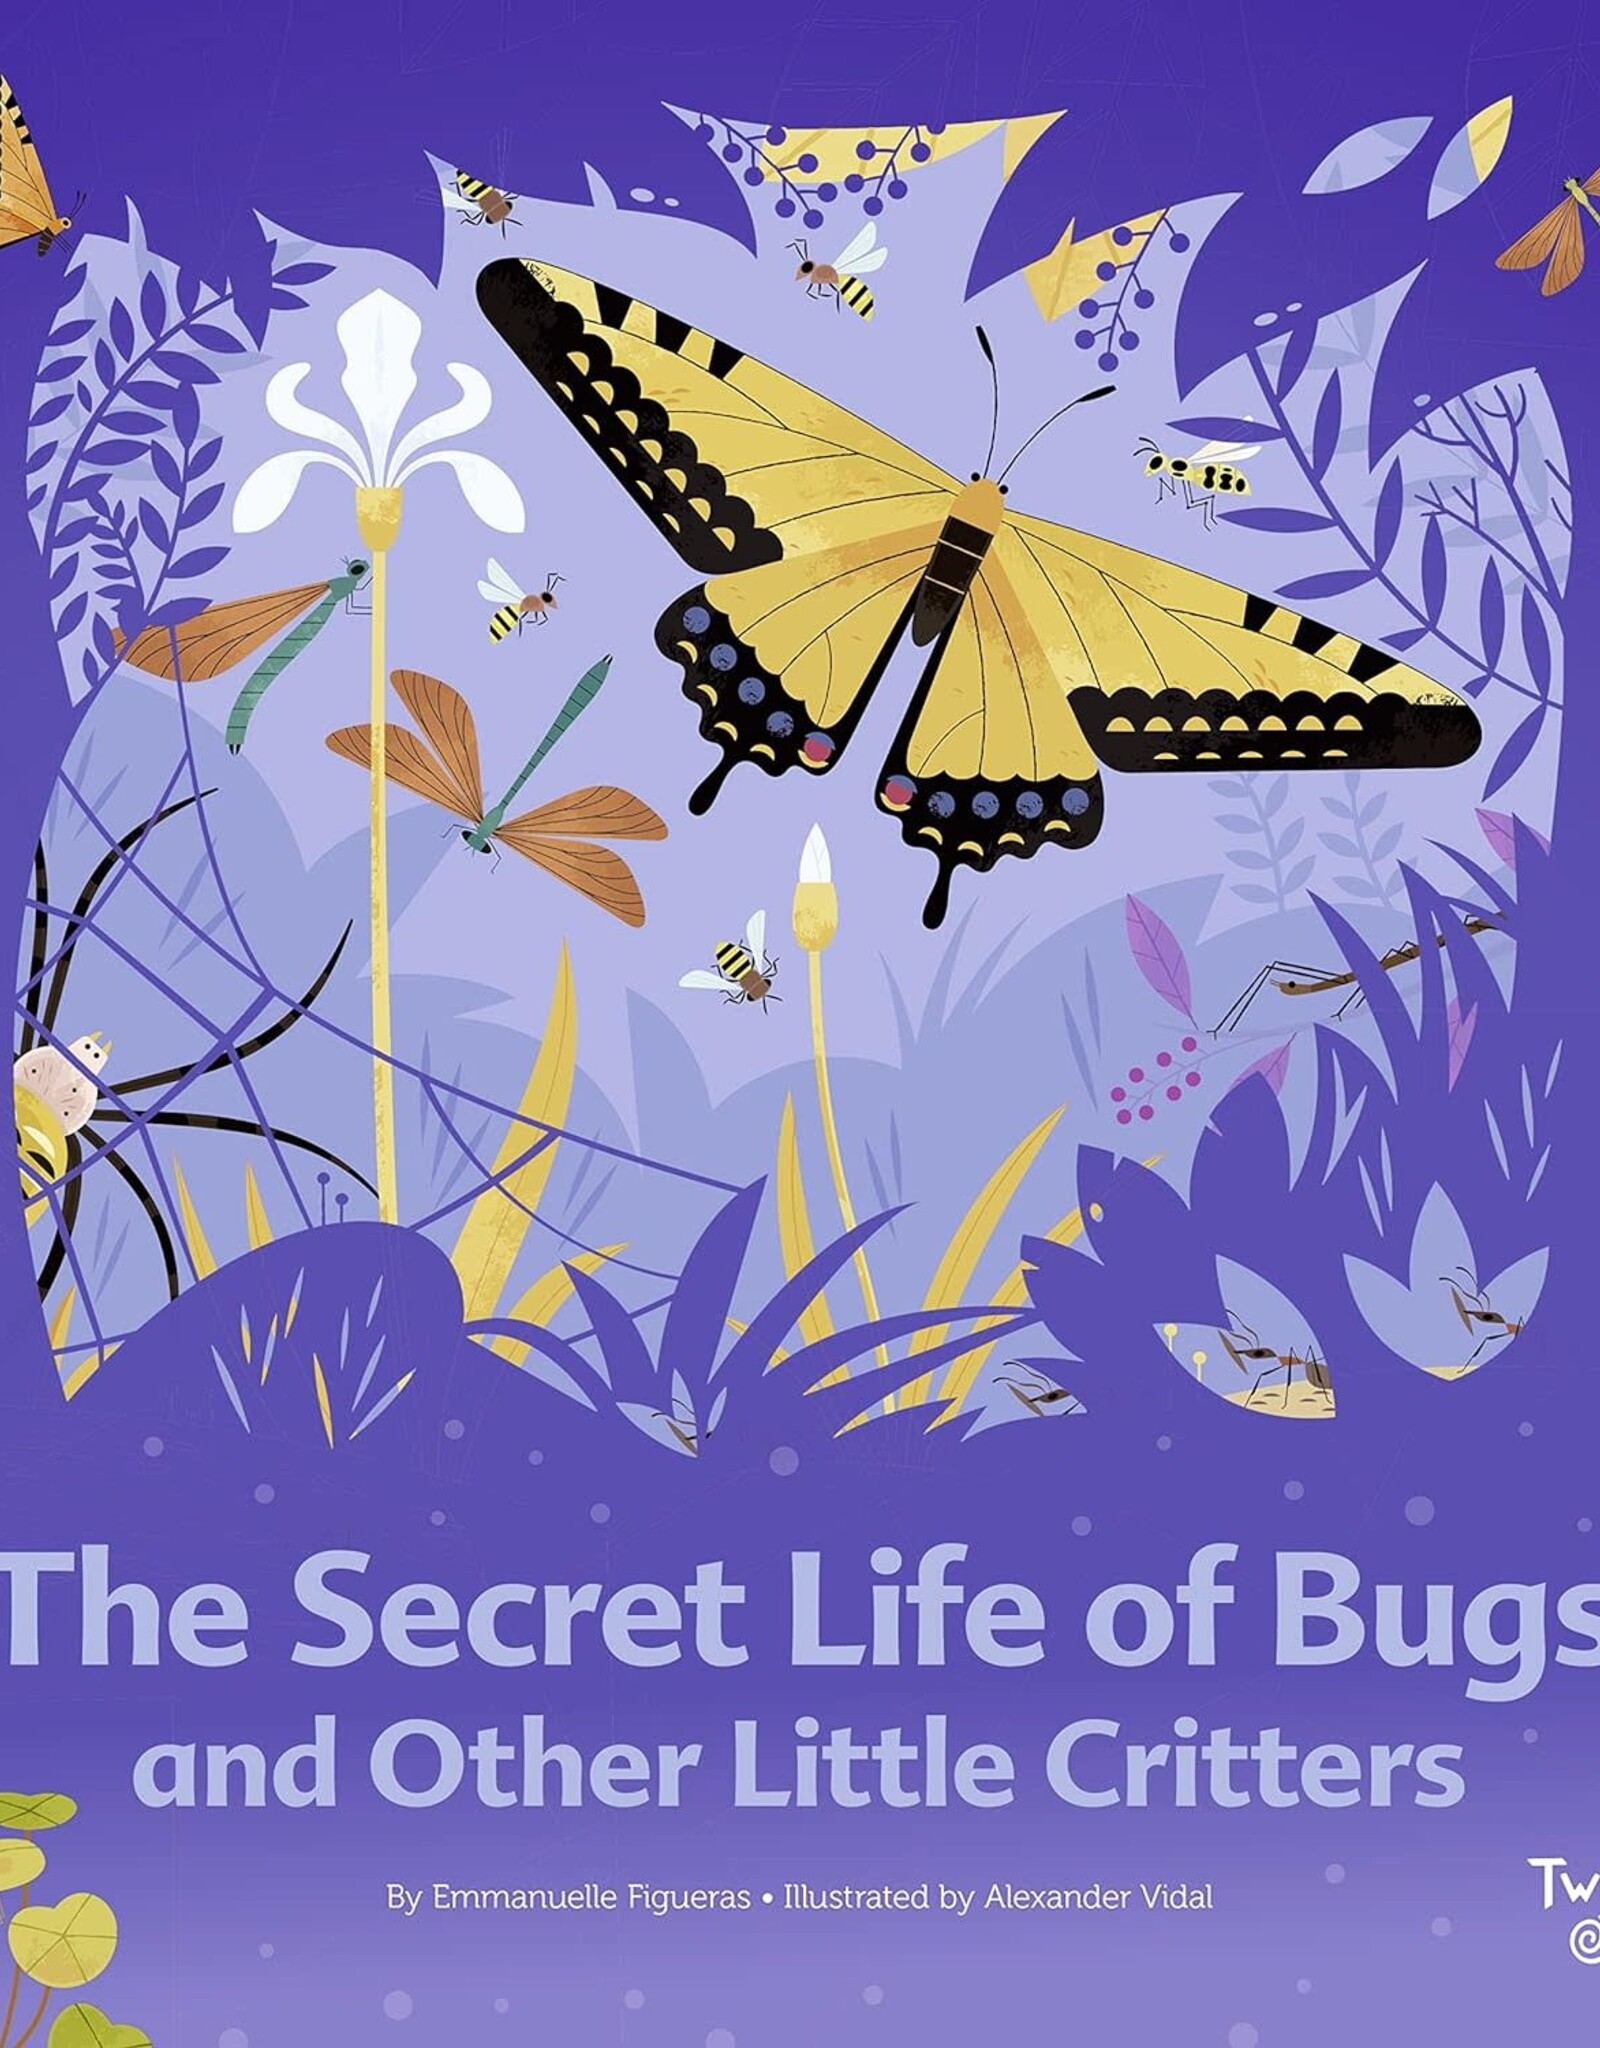 Chronicle Books Secret Life of Bugs